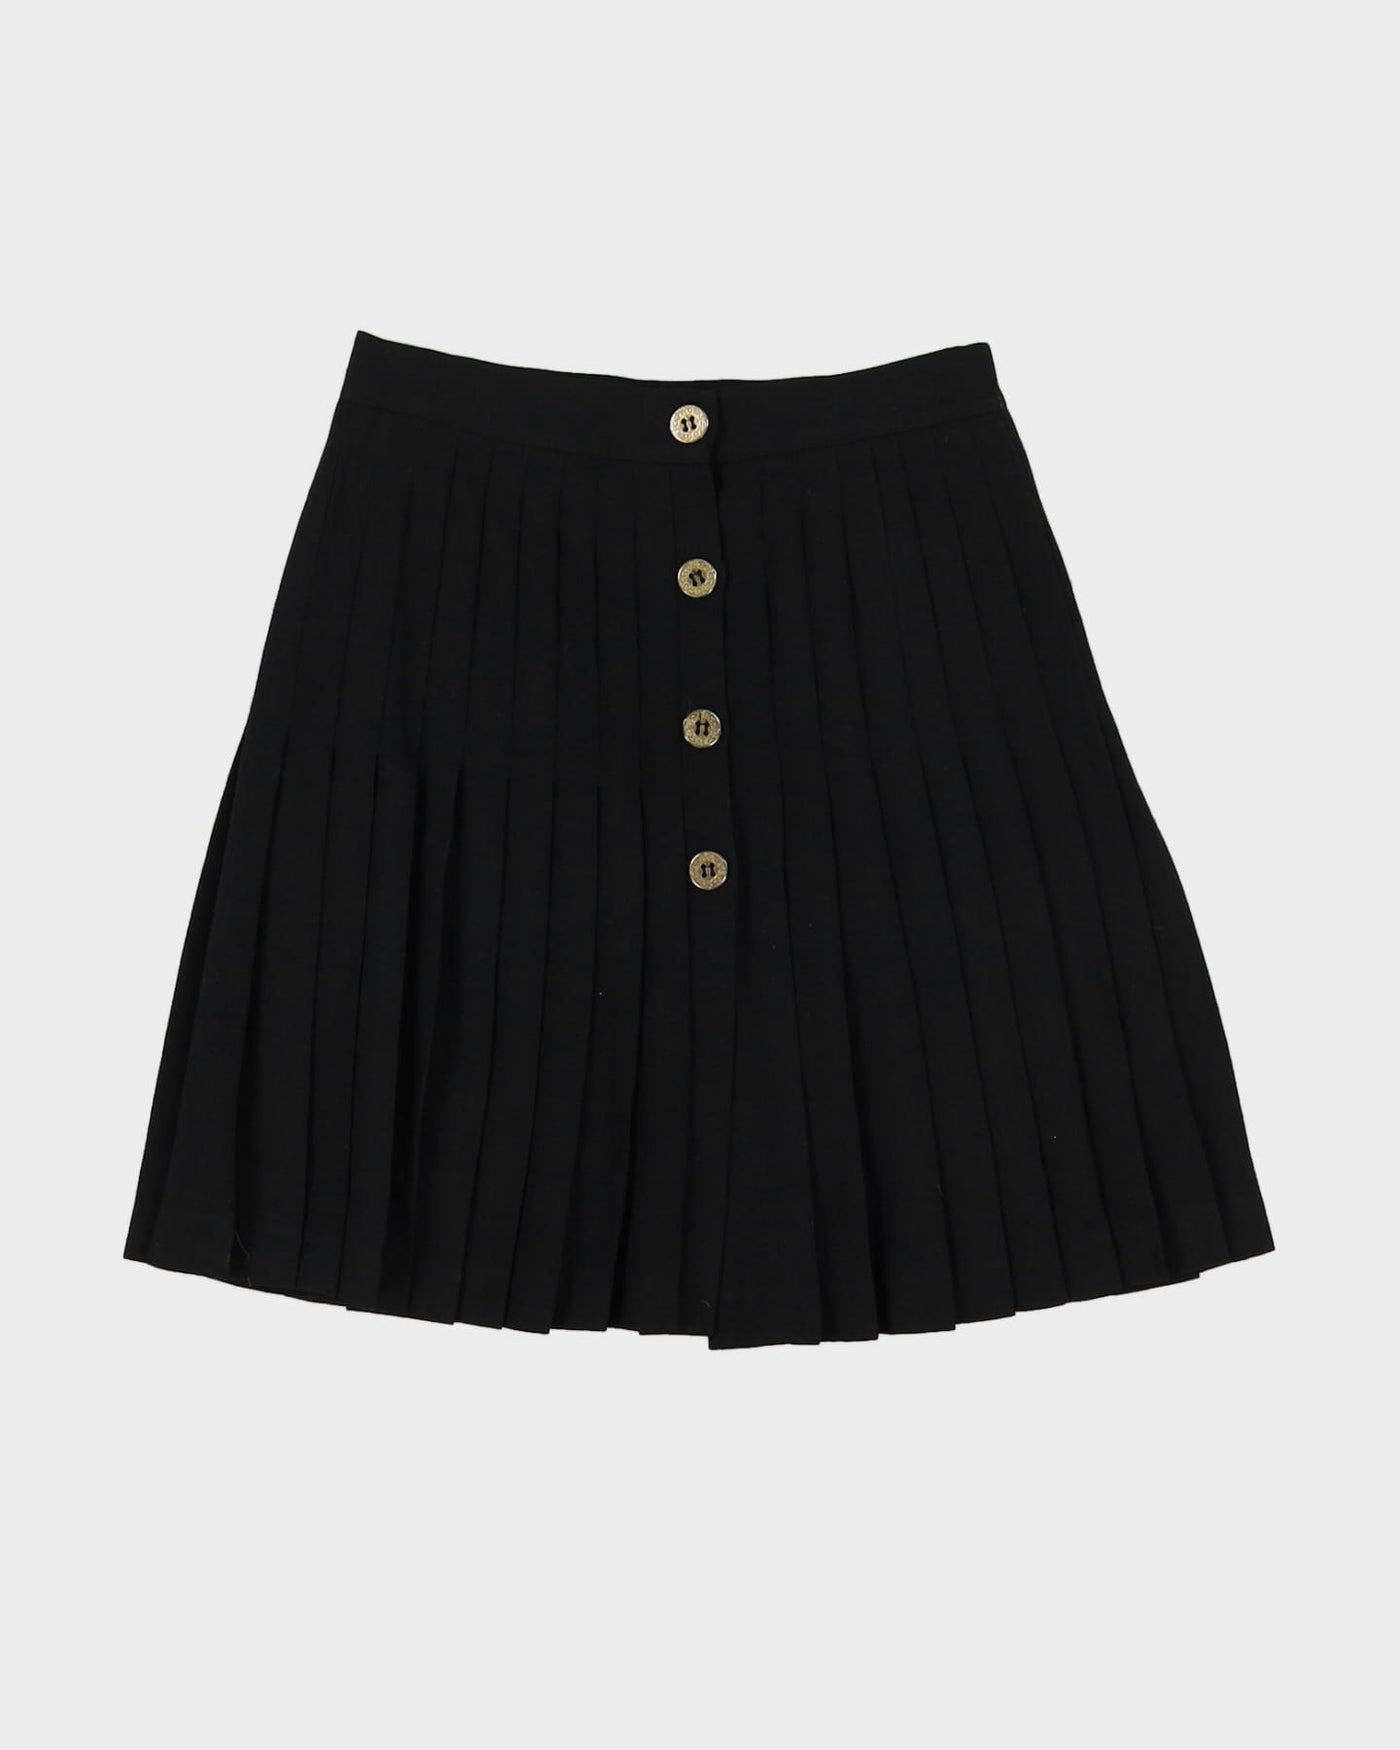 00s Black Pleated Skirt - S